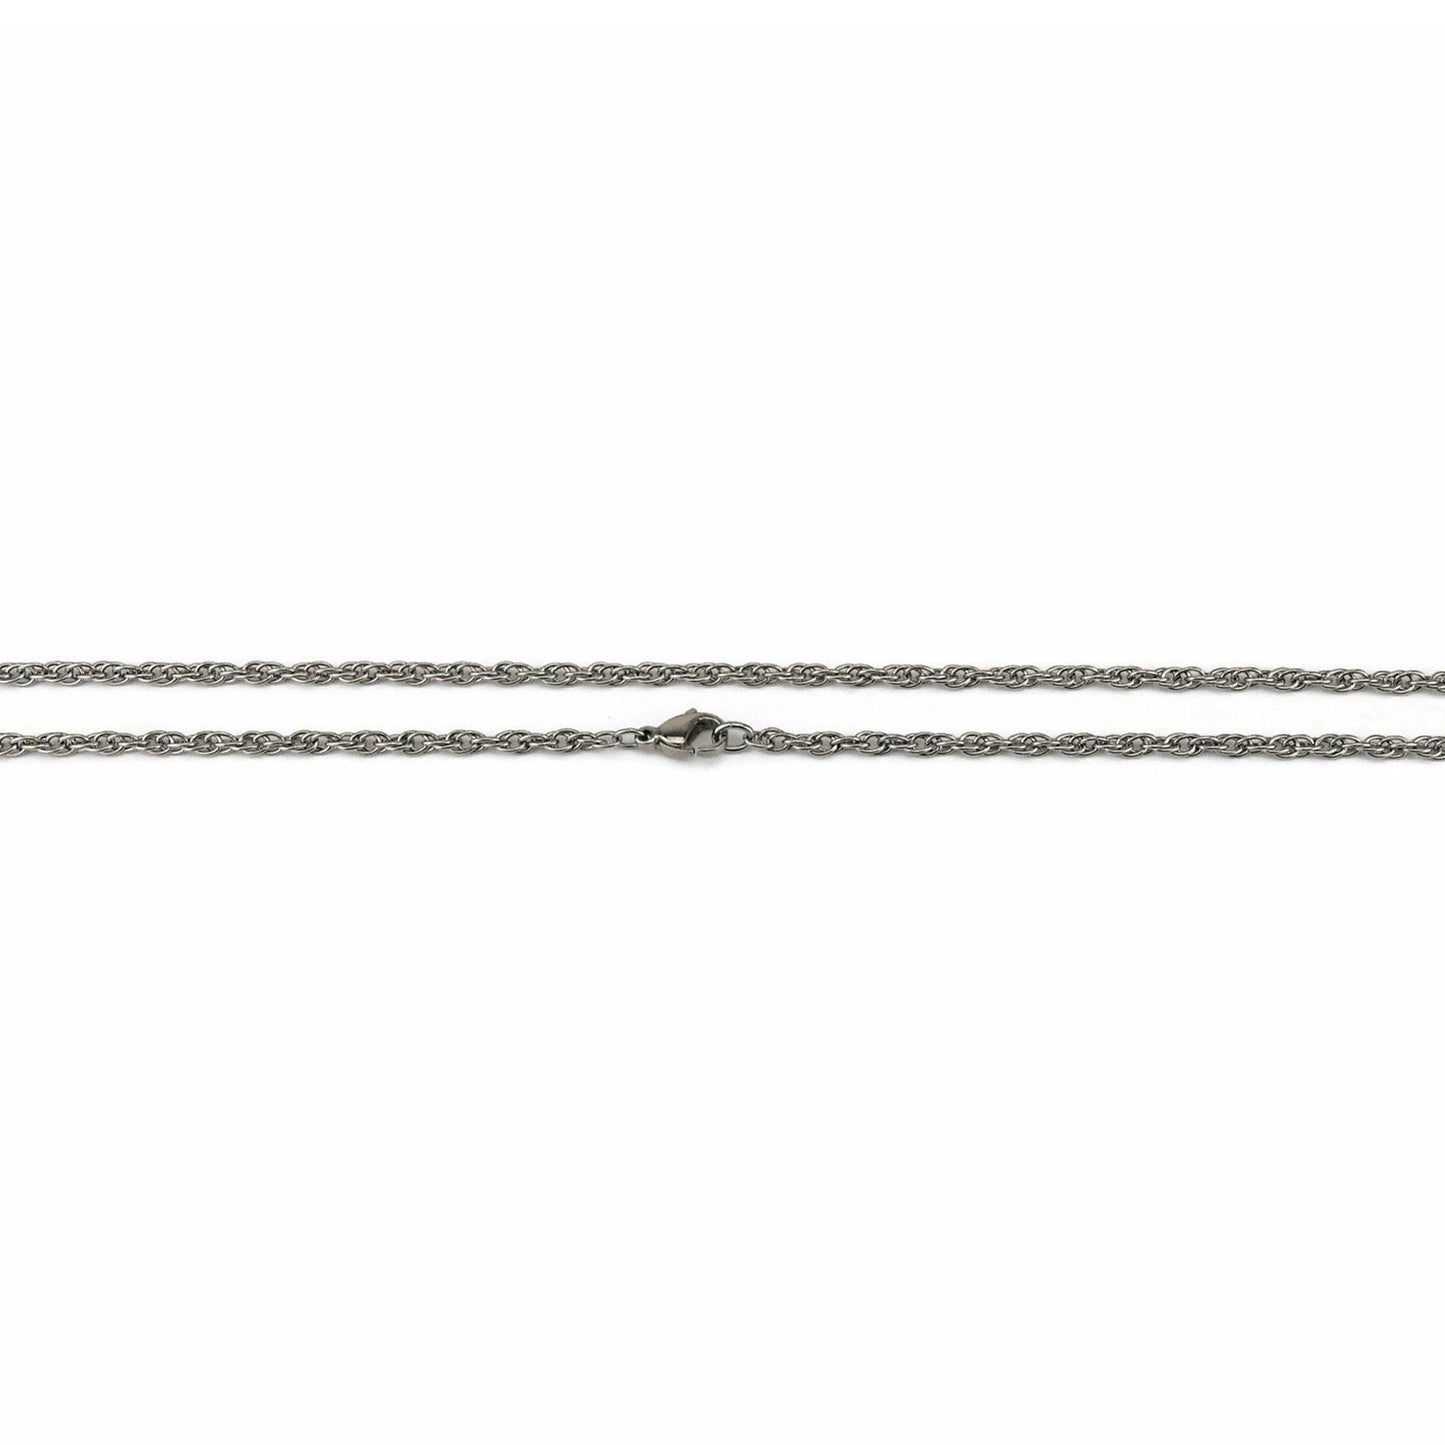 Double Rope Titanium Chain Necklace, Pure Titanium Chain Necklace for Sensitive Skin, Hypoallergenic and Nickel Free Titanium Necklace